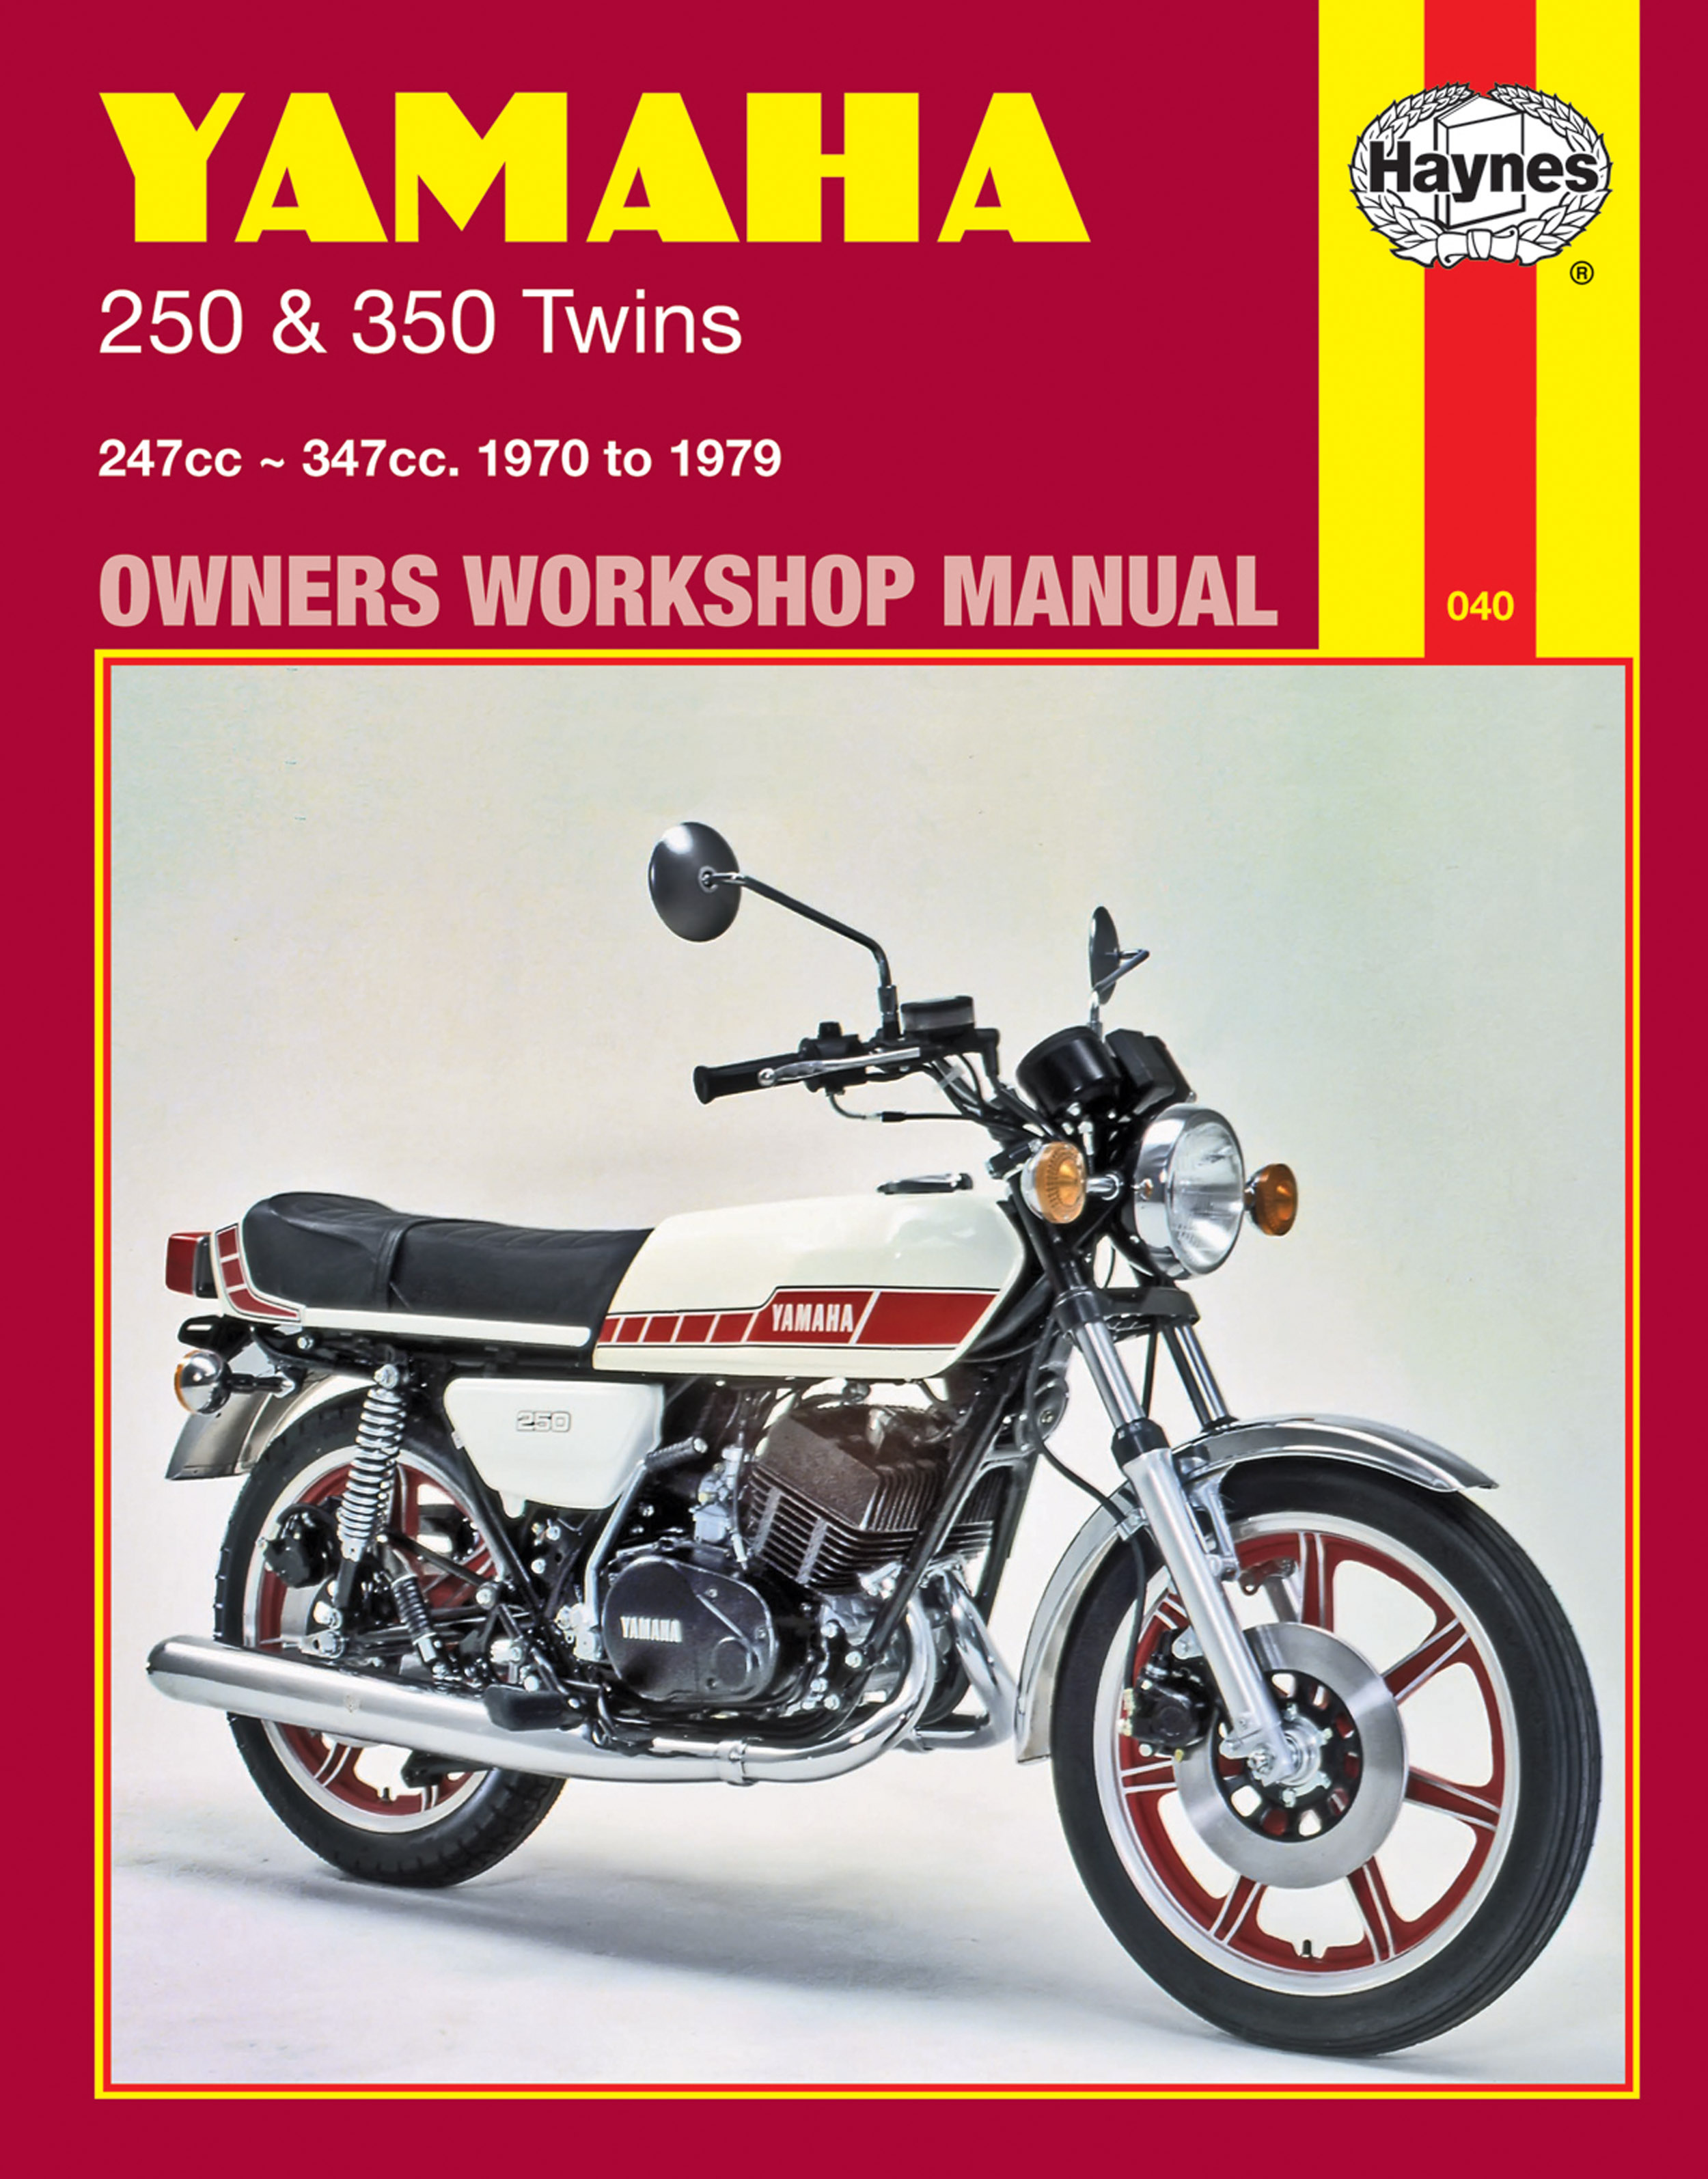 Haynes Manual DT250 75-79,RT360 70-73,DT360,DT400 74-77 Each